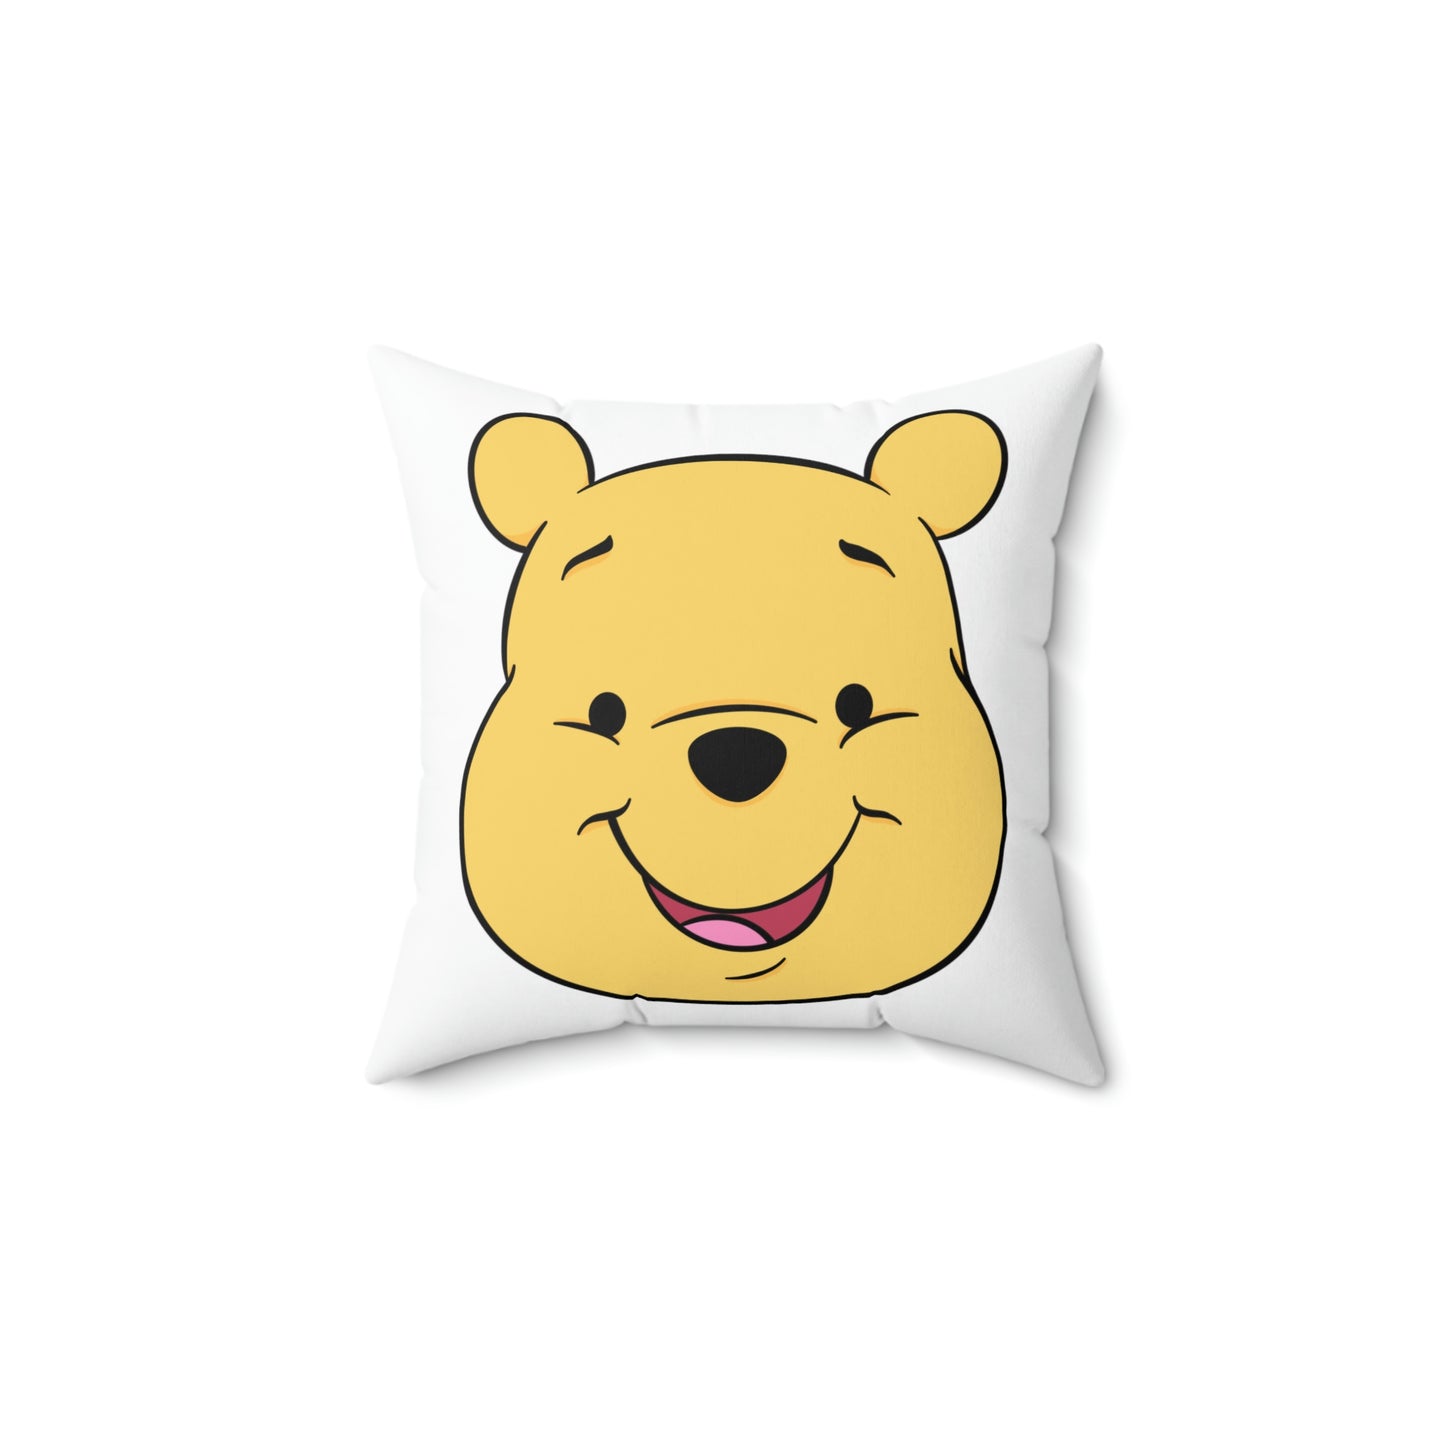 Spun Polyester Square Pillow Case “Pooh on White”